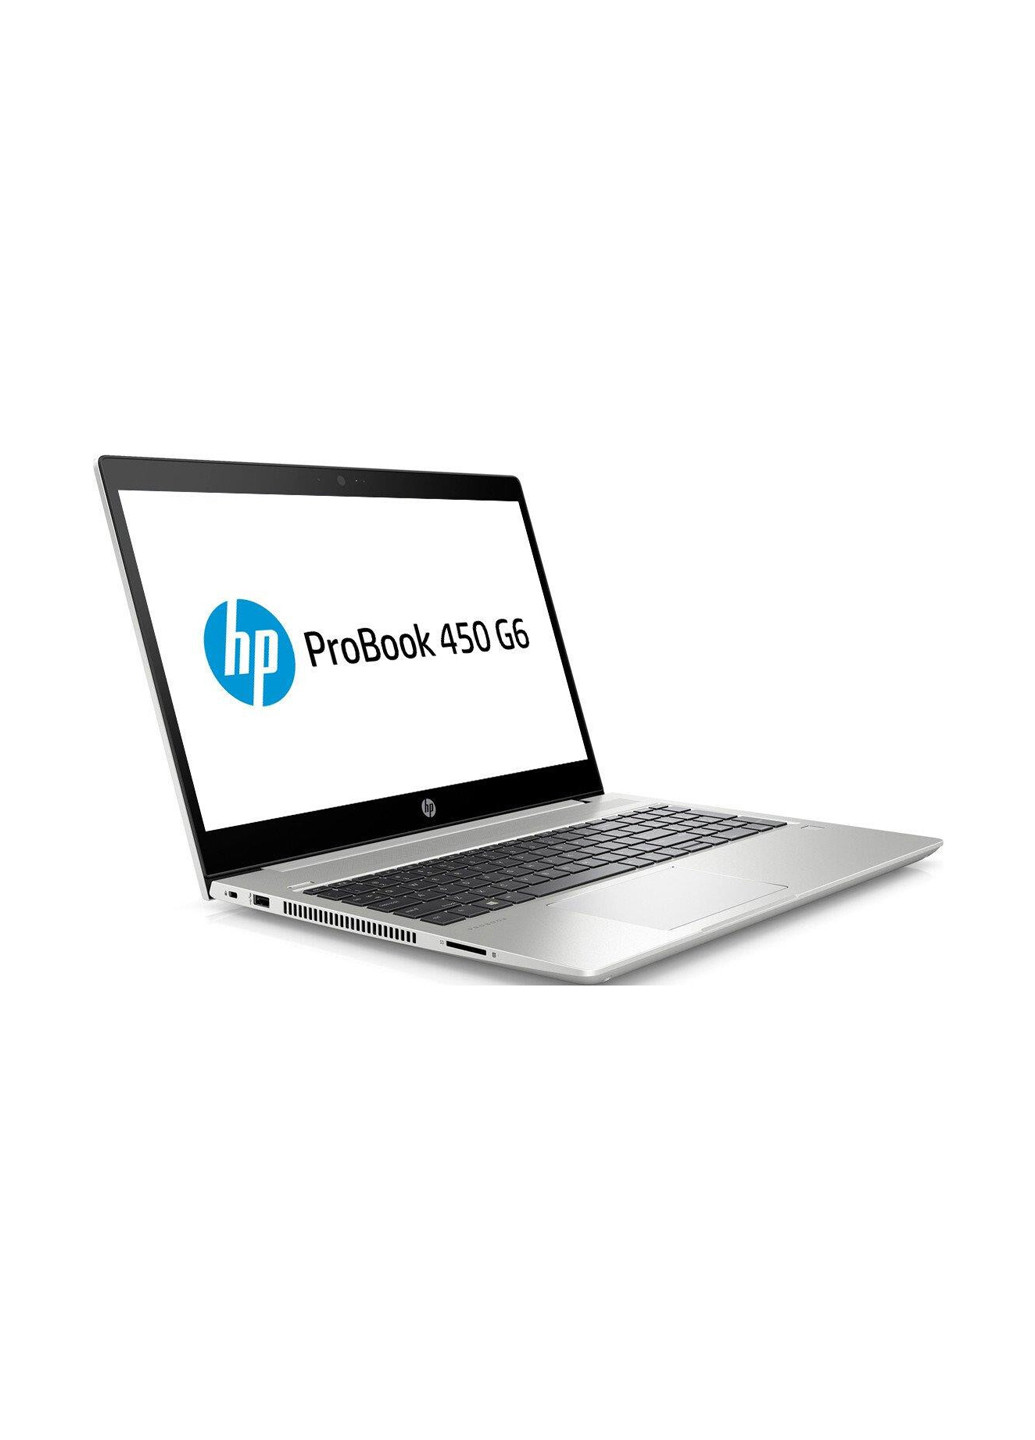 Ноутбук HP probook 450 g6 (4sz43av_v10) silver (158838142)